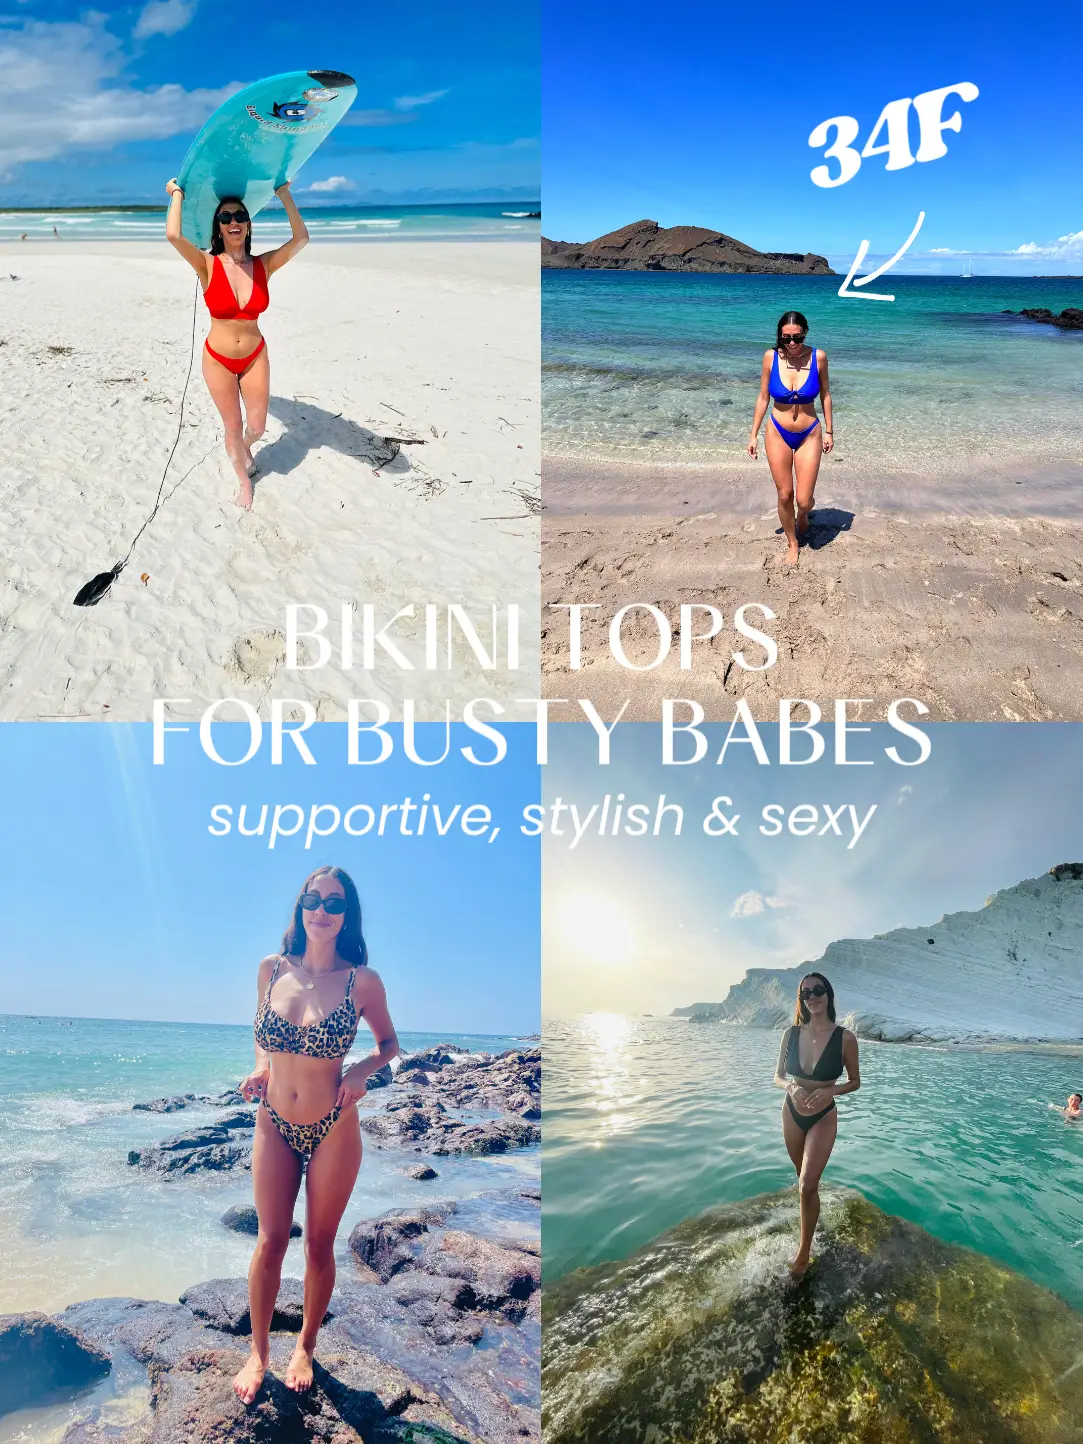 Women's Ruffle Cheeky Bikini Bottom - Shade & Shore™ Dark Green XL